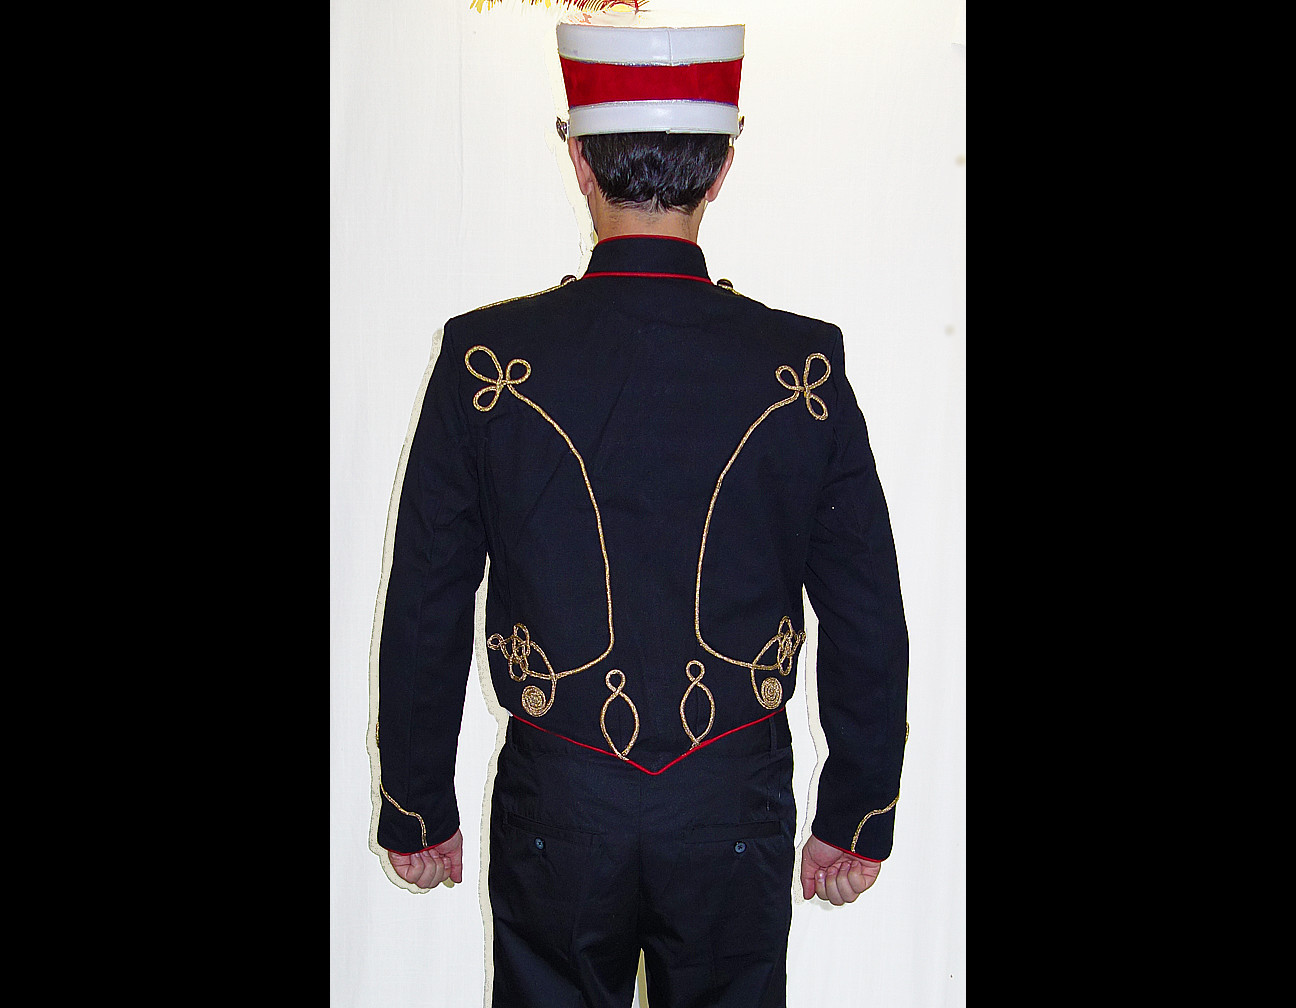 Napoleonic Jacket 1812-1815 11th Hussars Tunic Prince Albert Marching Band L 